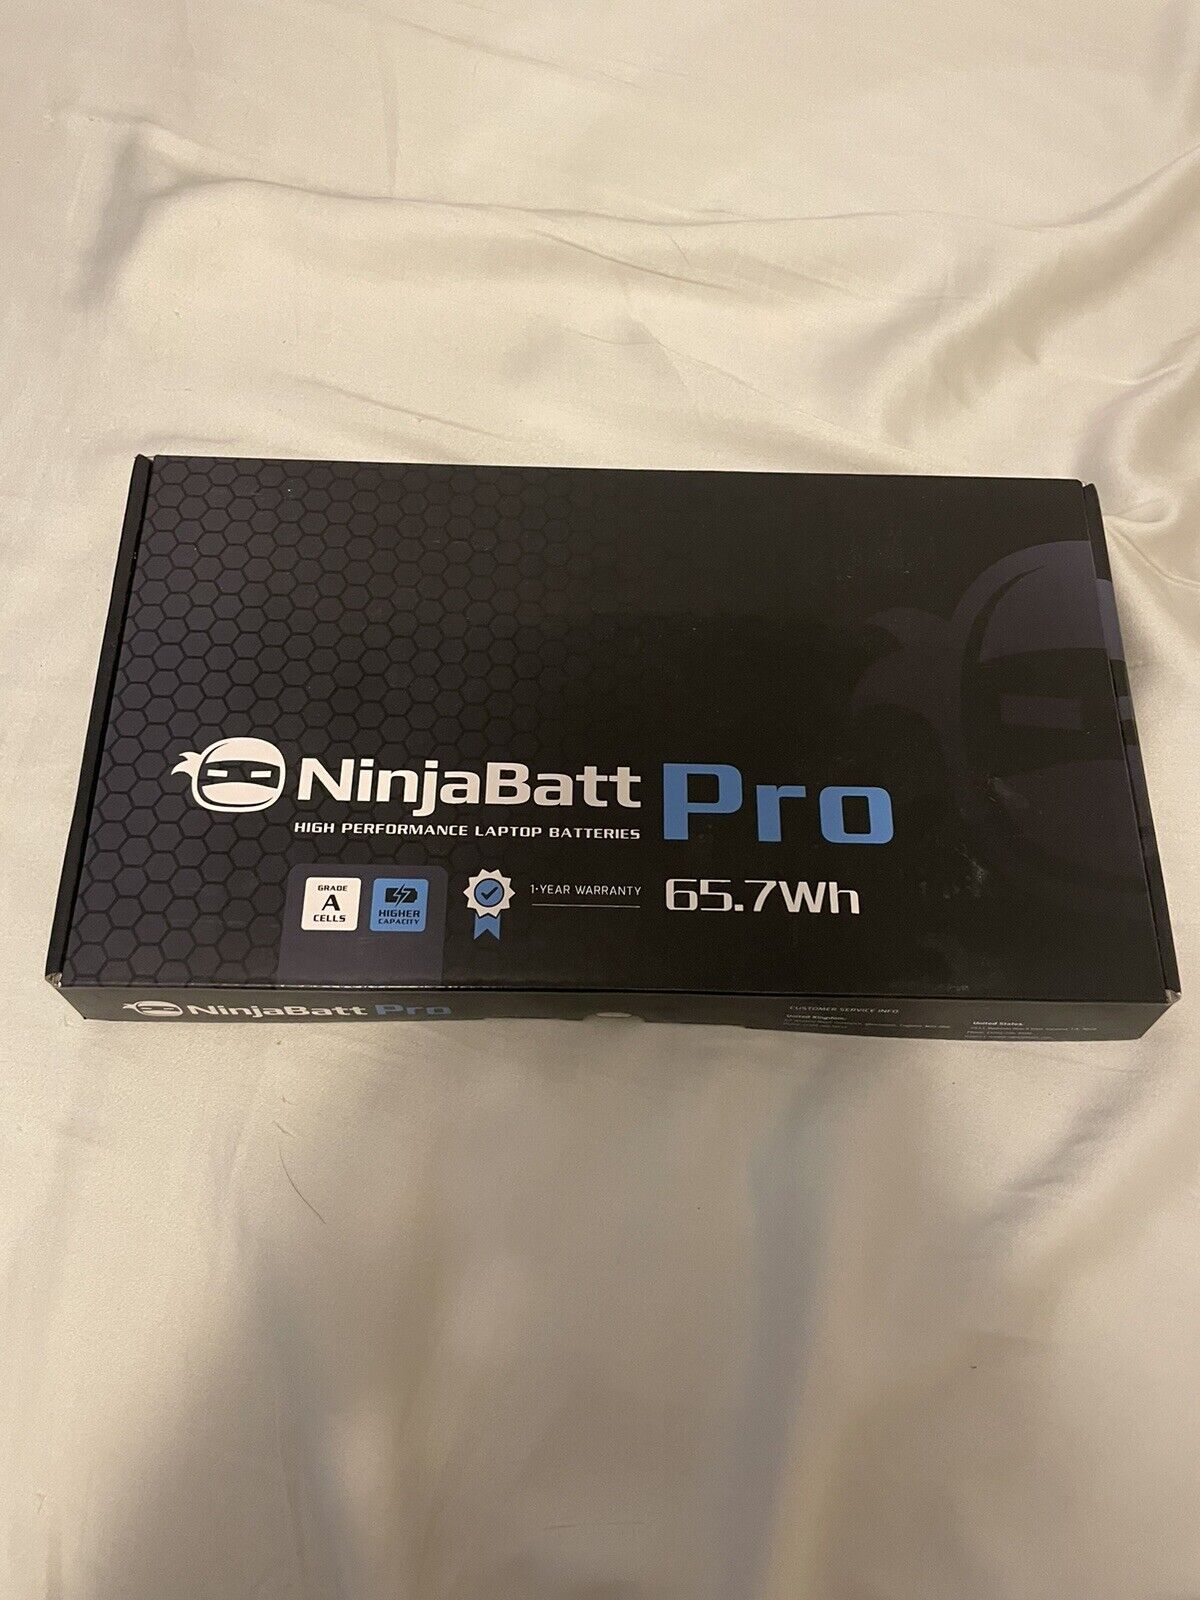 NinjaBatt Pro Battery A12 65.7 Wh/10 95v For Mac